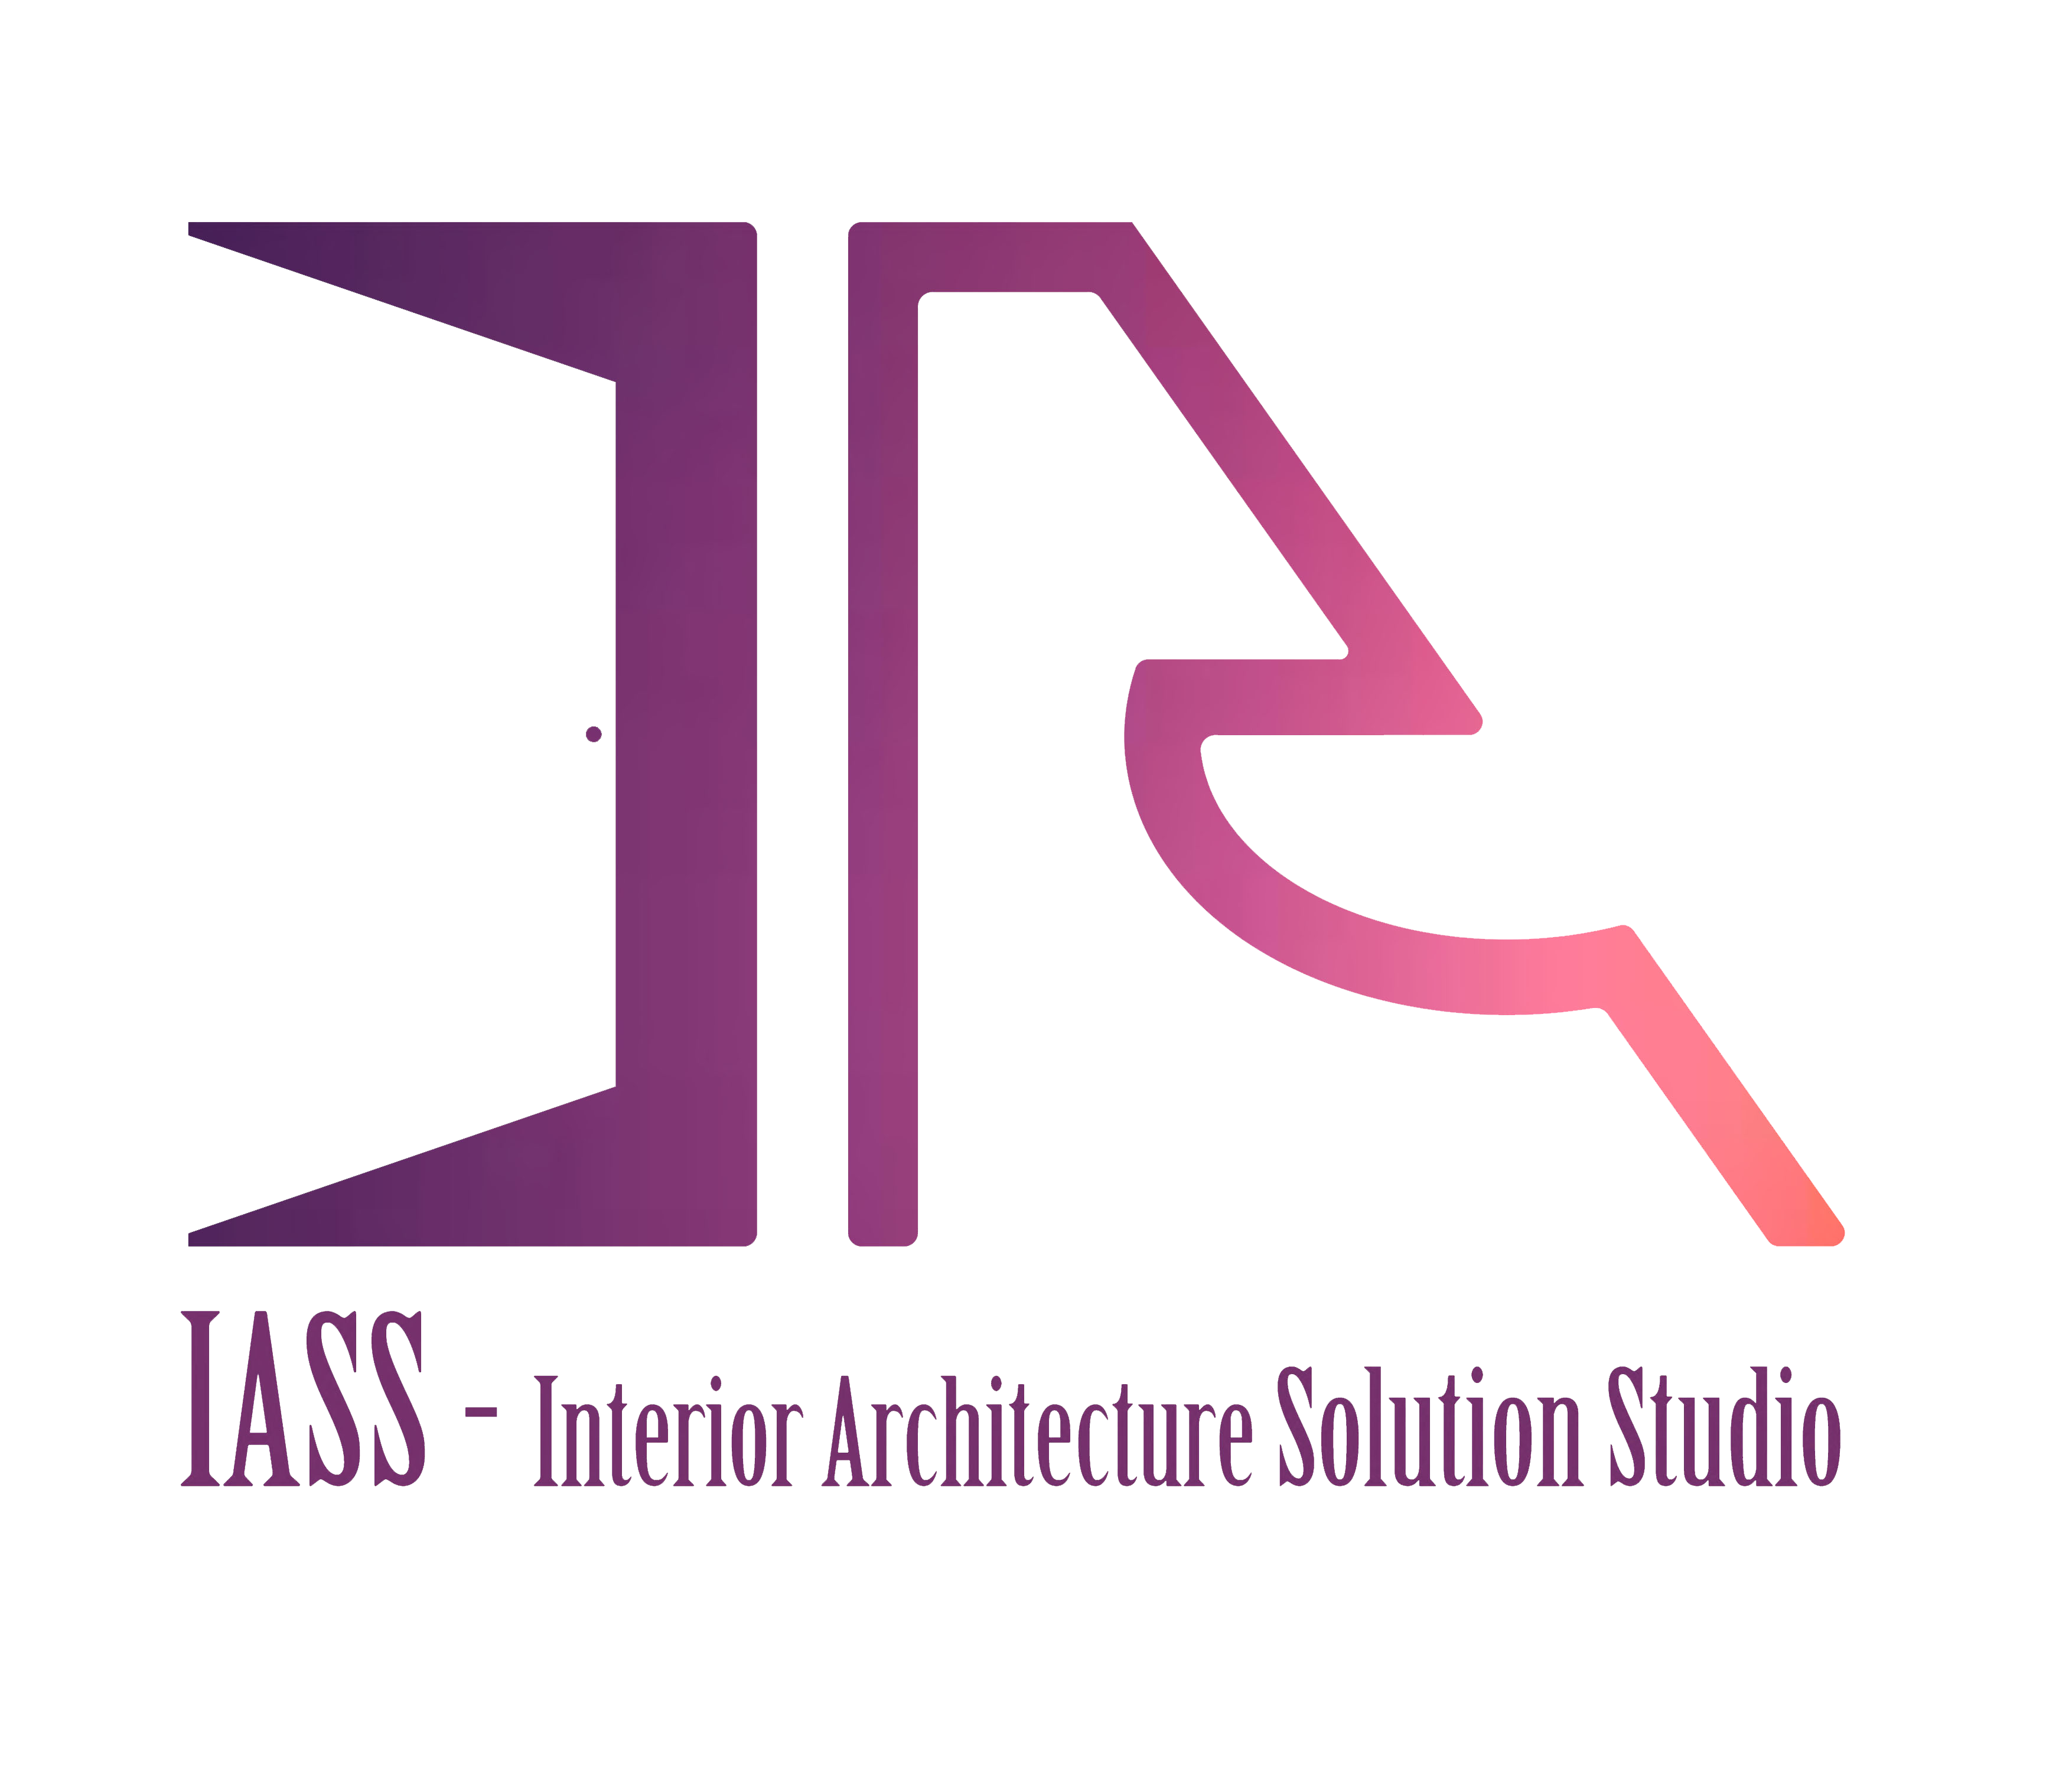 133496_iass_logo-model.png